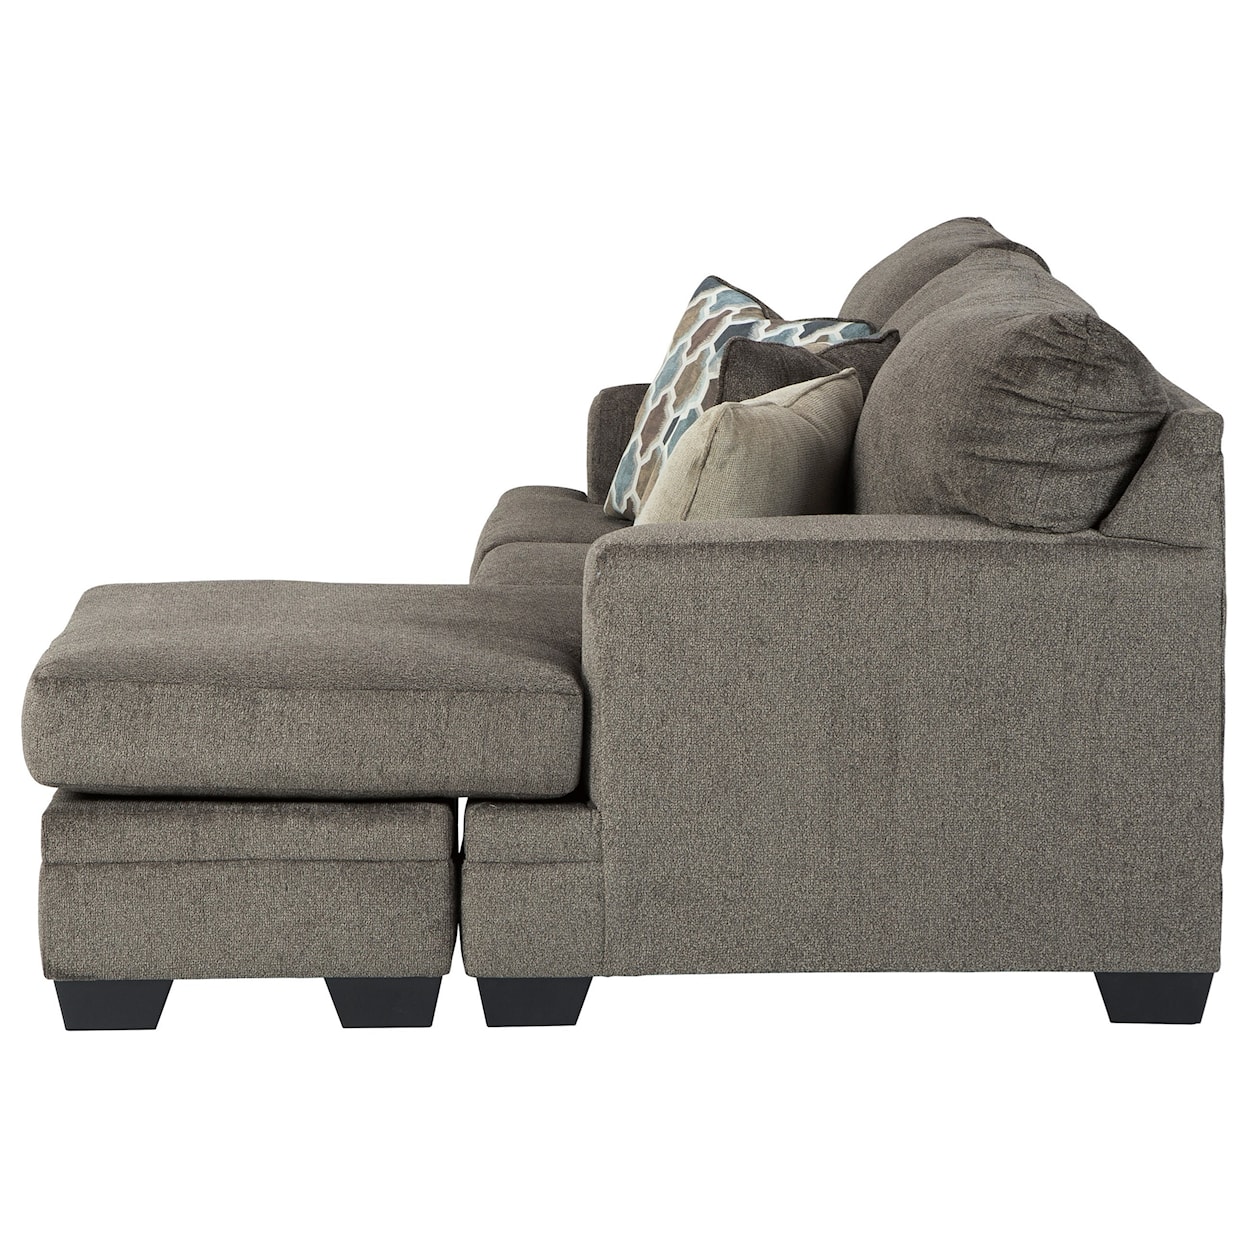 Ashley Furniture Signature Design Dorsten Sofa with Chaise